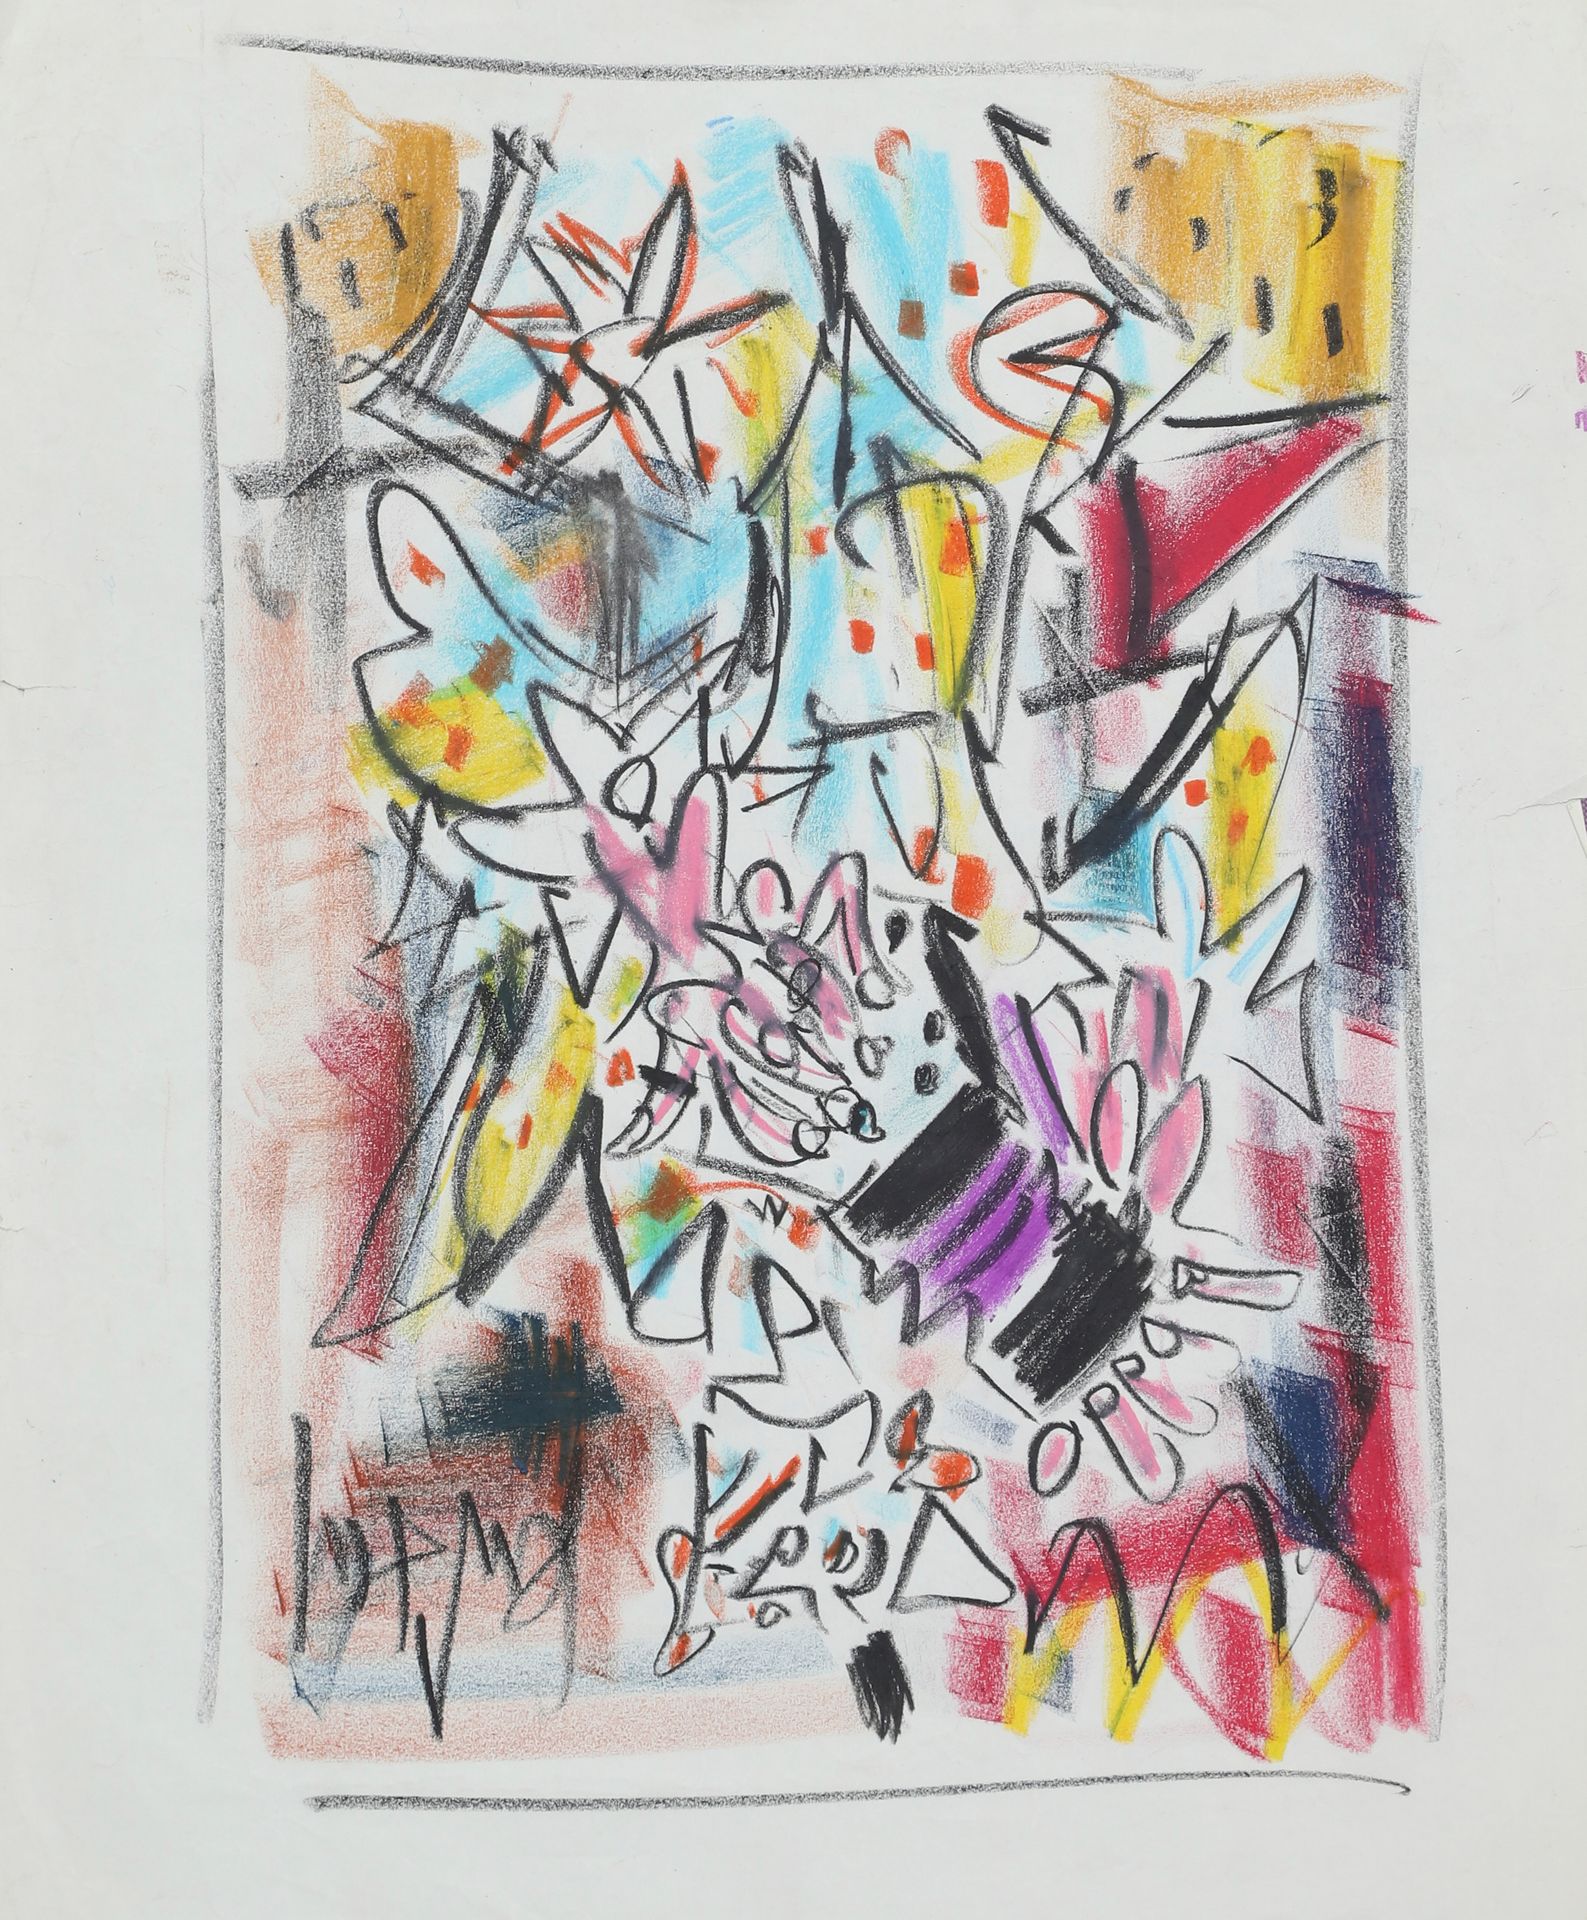 GEN PAUL (1895-1975) 2件纸上作品 > Bouquet de fleurs

纸上粉笔画，右下角有签名

> 小丑

纸上粉彩，右上角有签名&hellip;